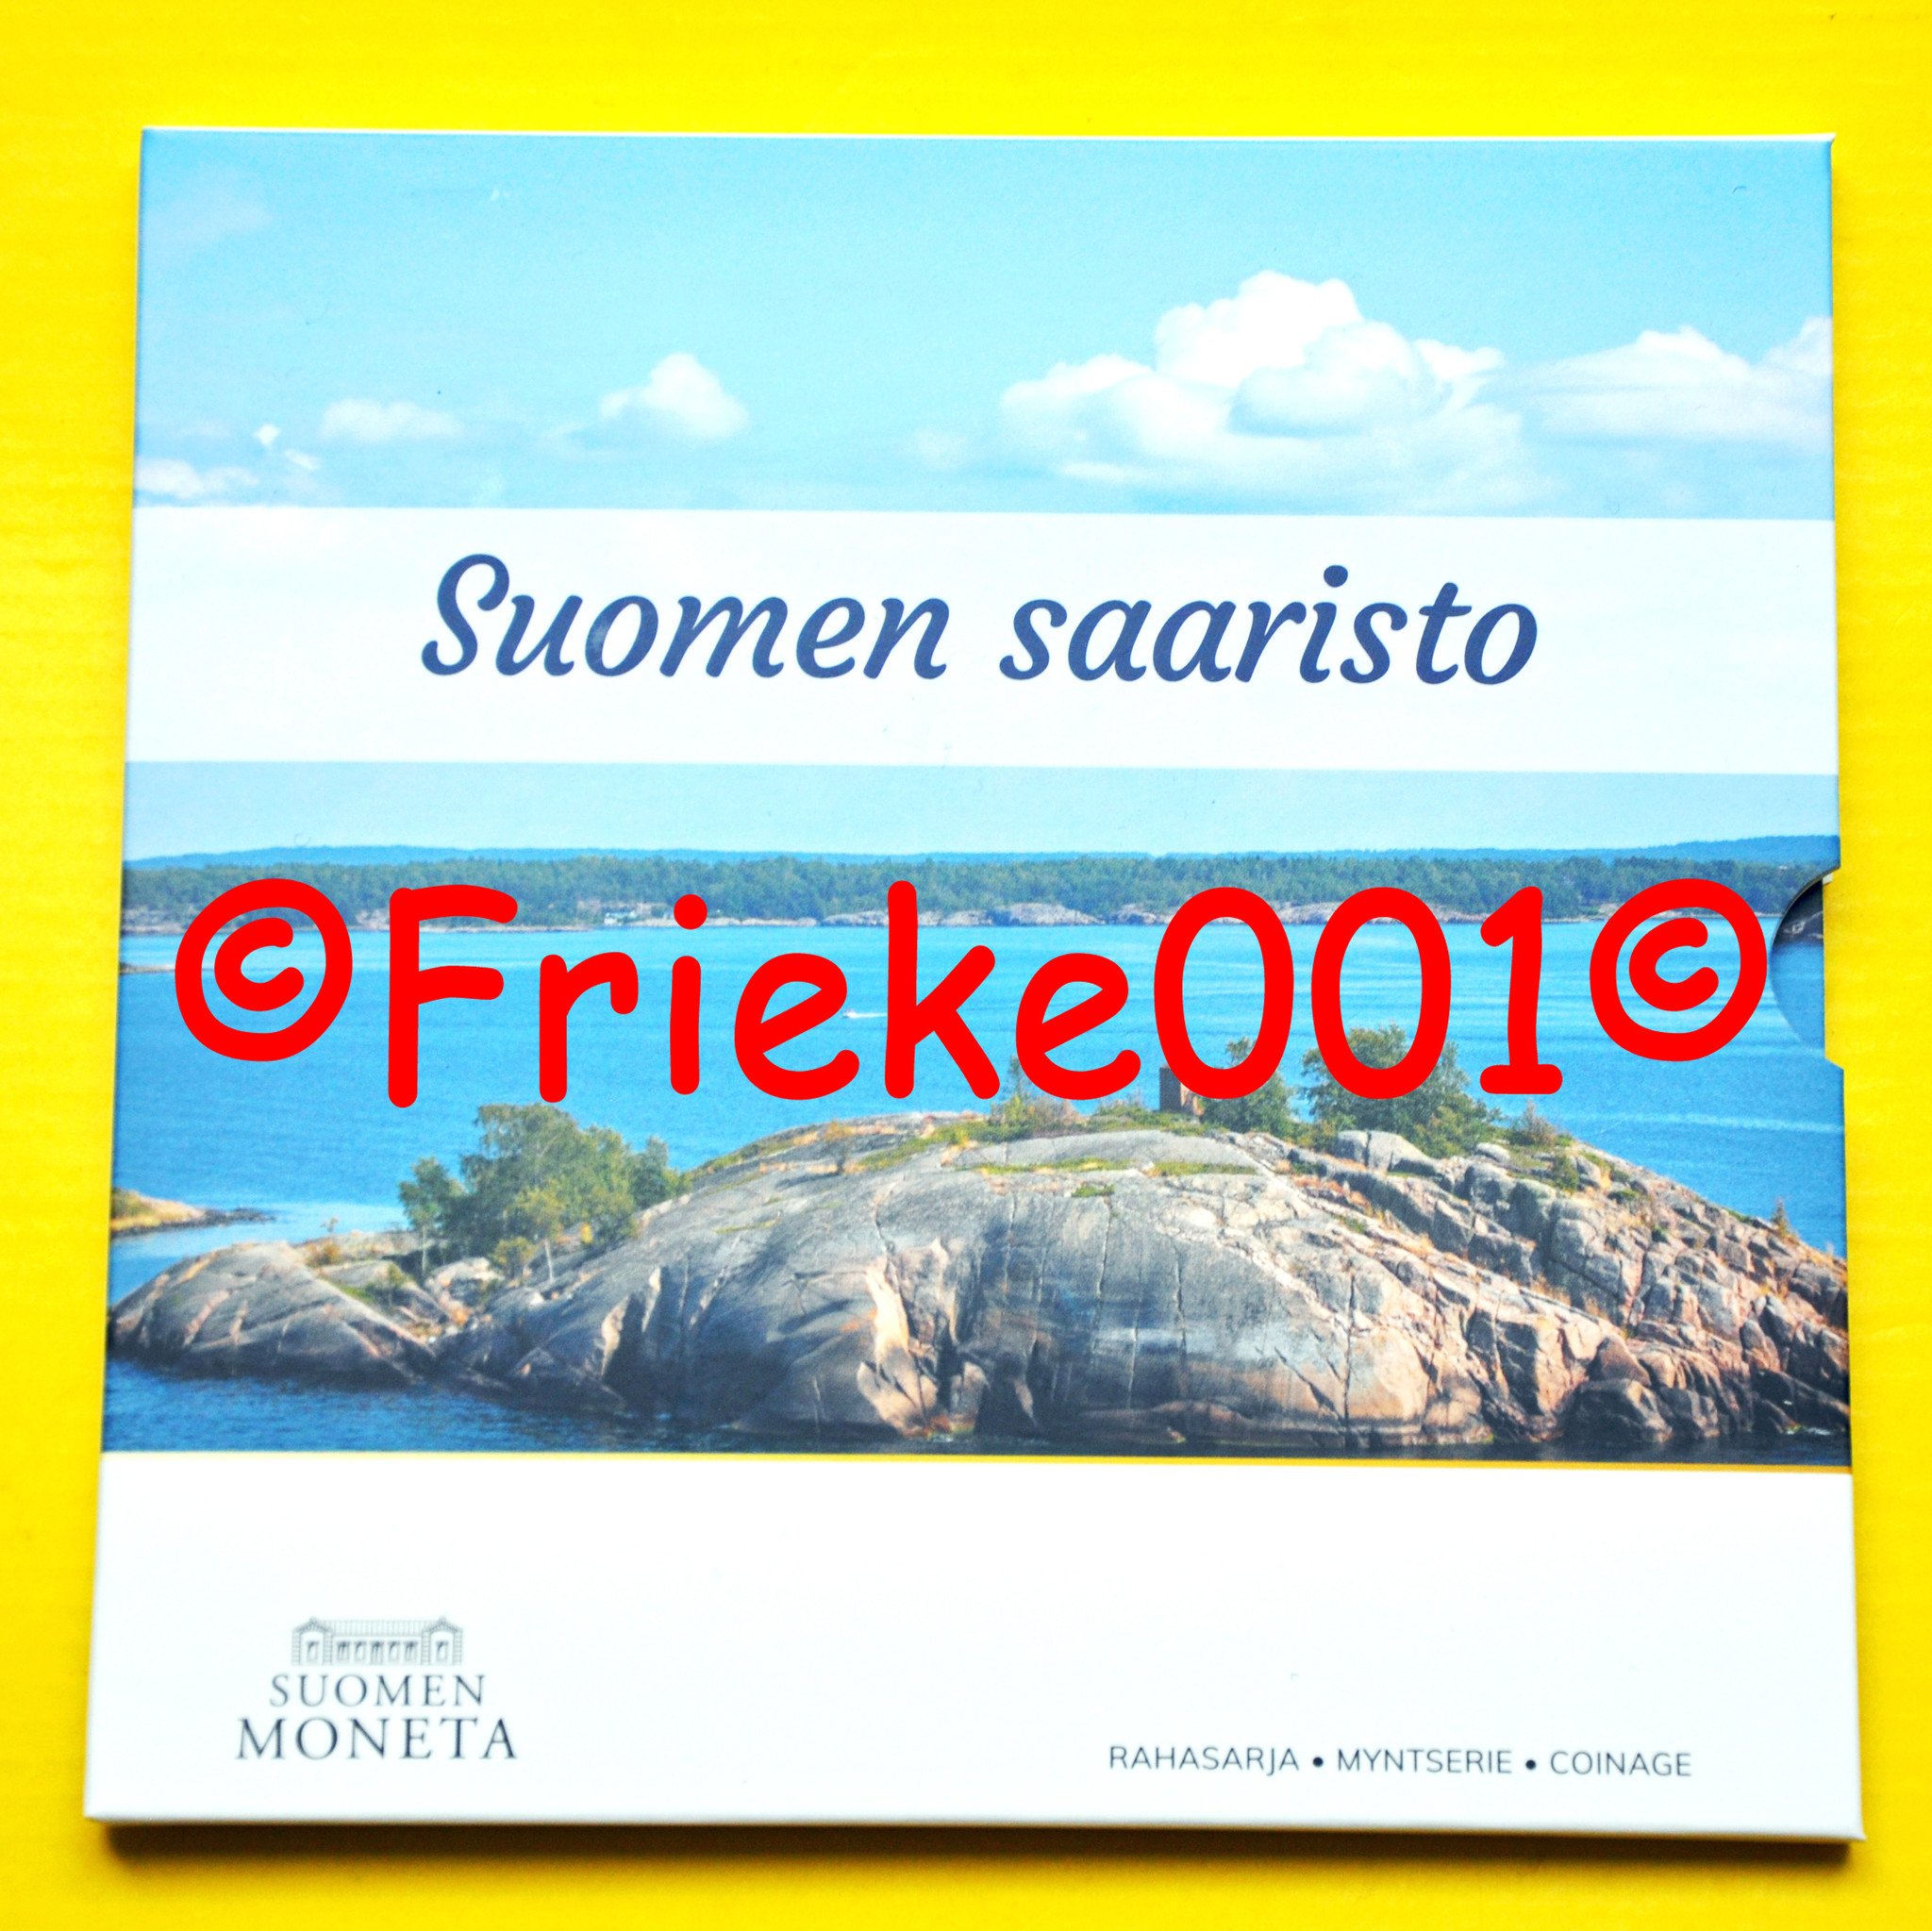 Finland 2021 bu.(Suomen Saaristo) - Frieke001